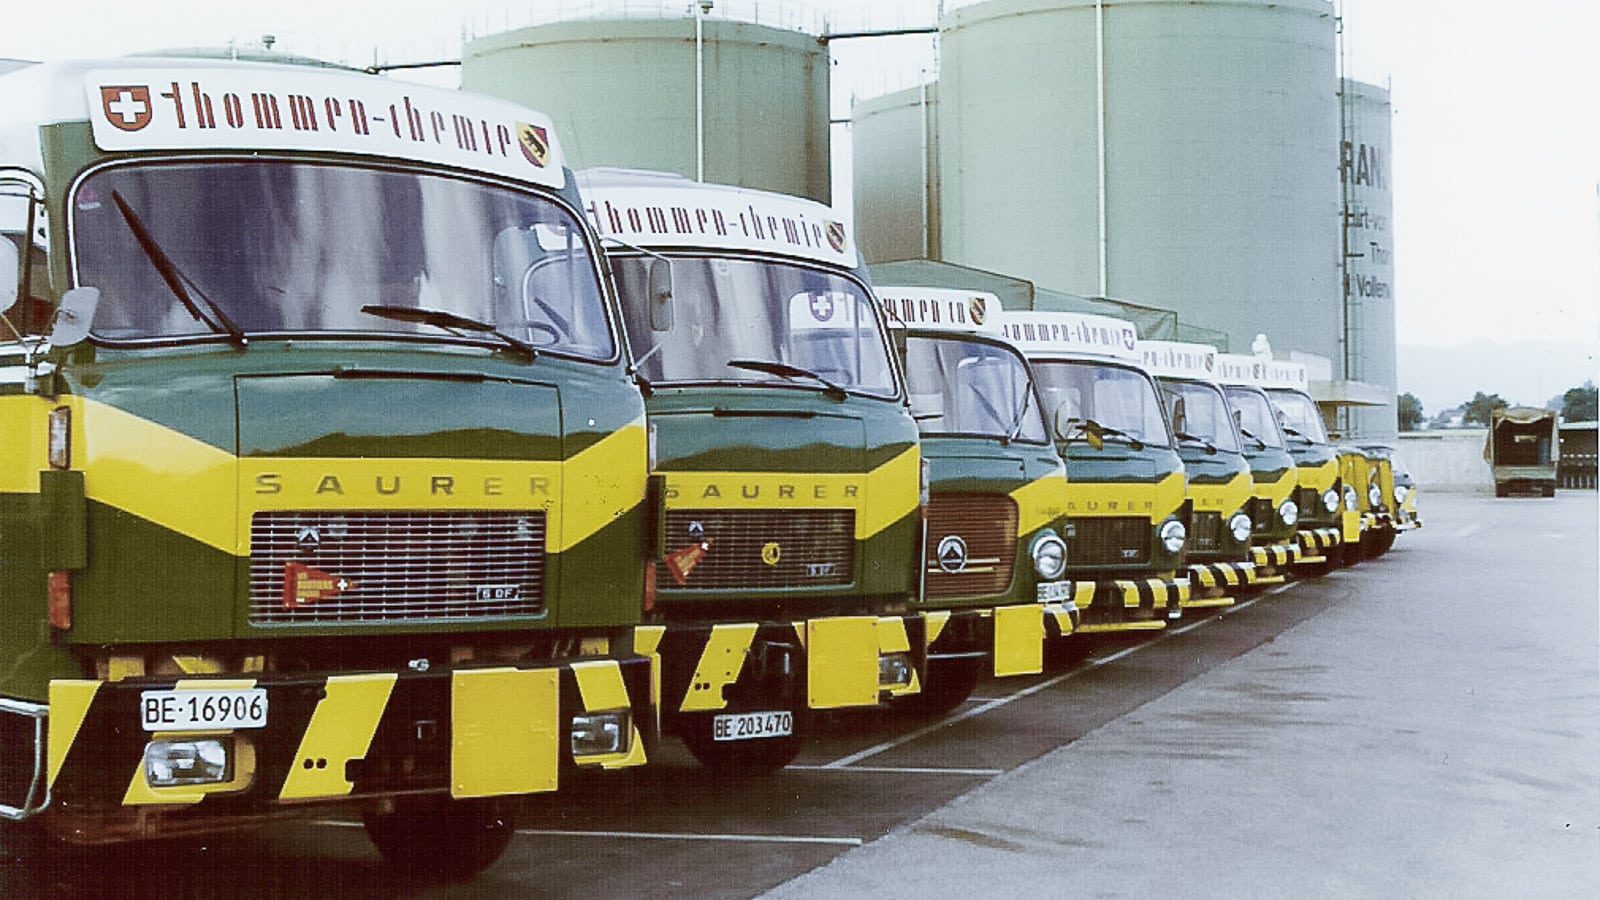 Historic Thommen-Furler vehicle fleet